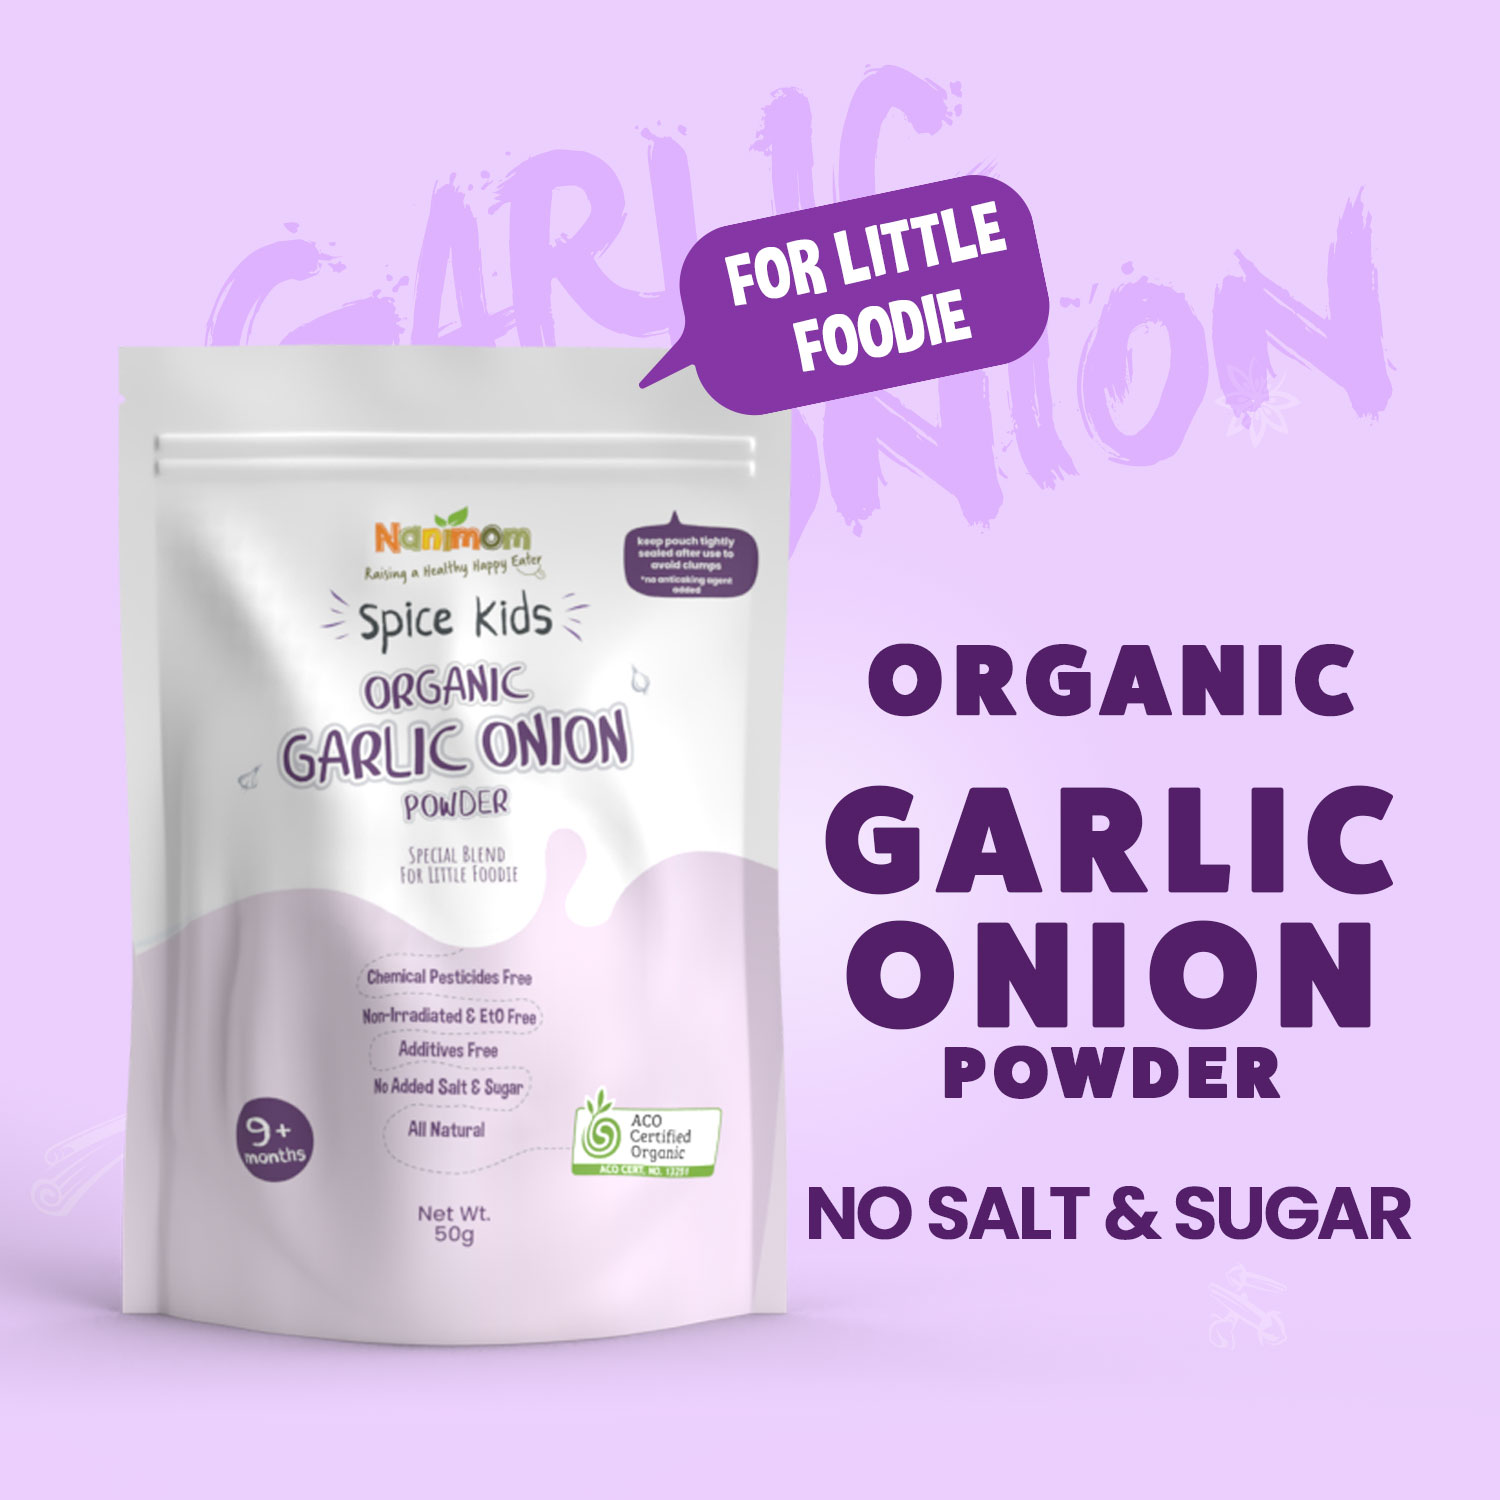 Nanimom Spice Kids Organic Garlic & Onion Powder